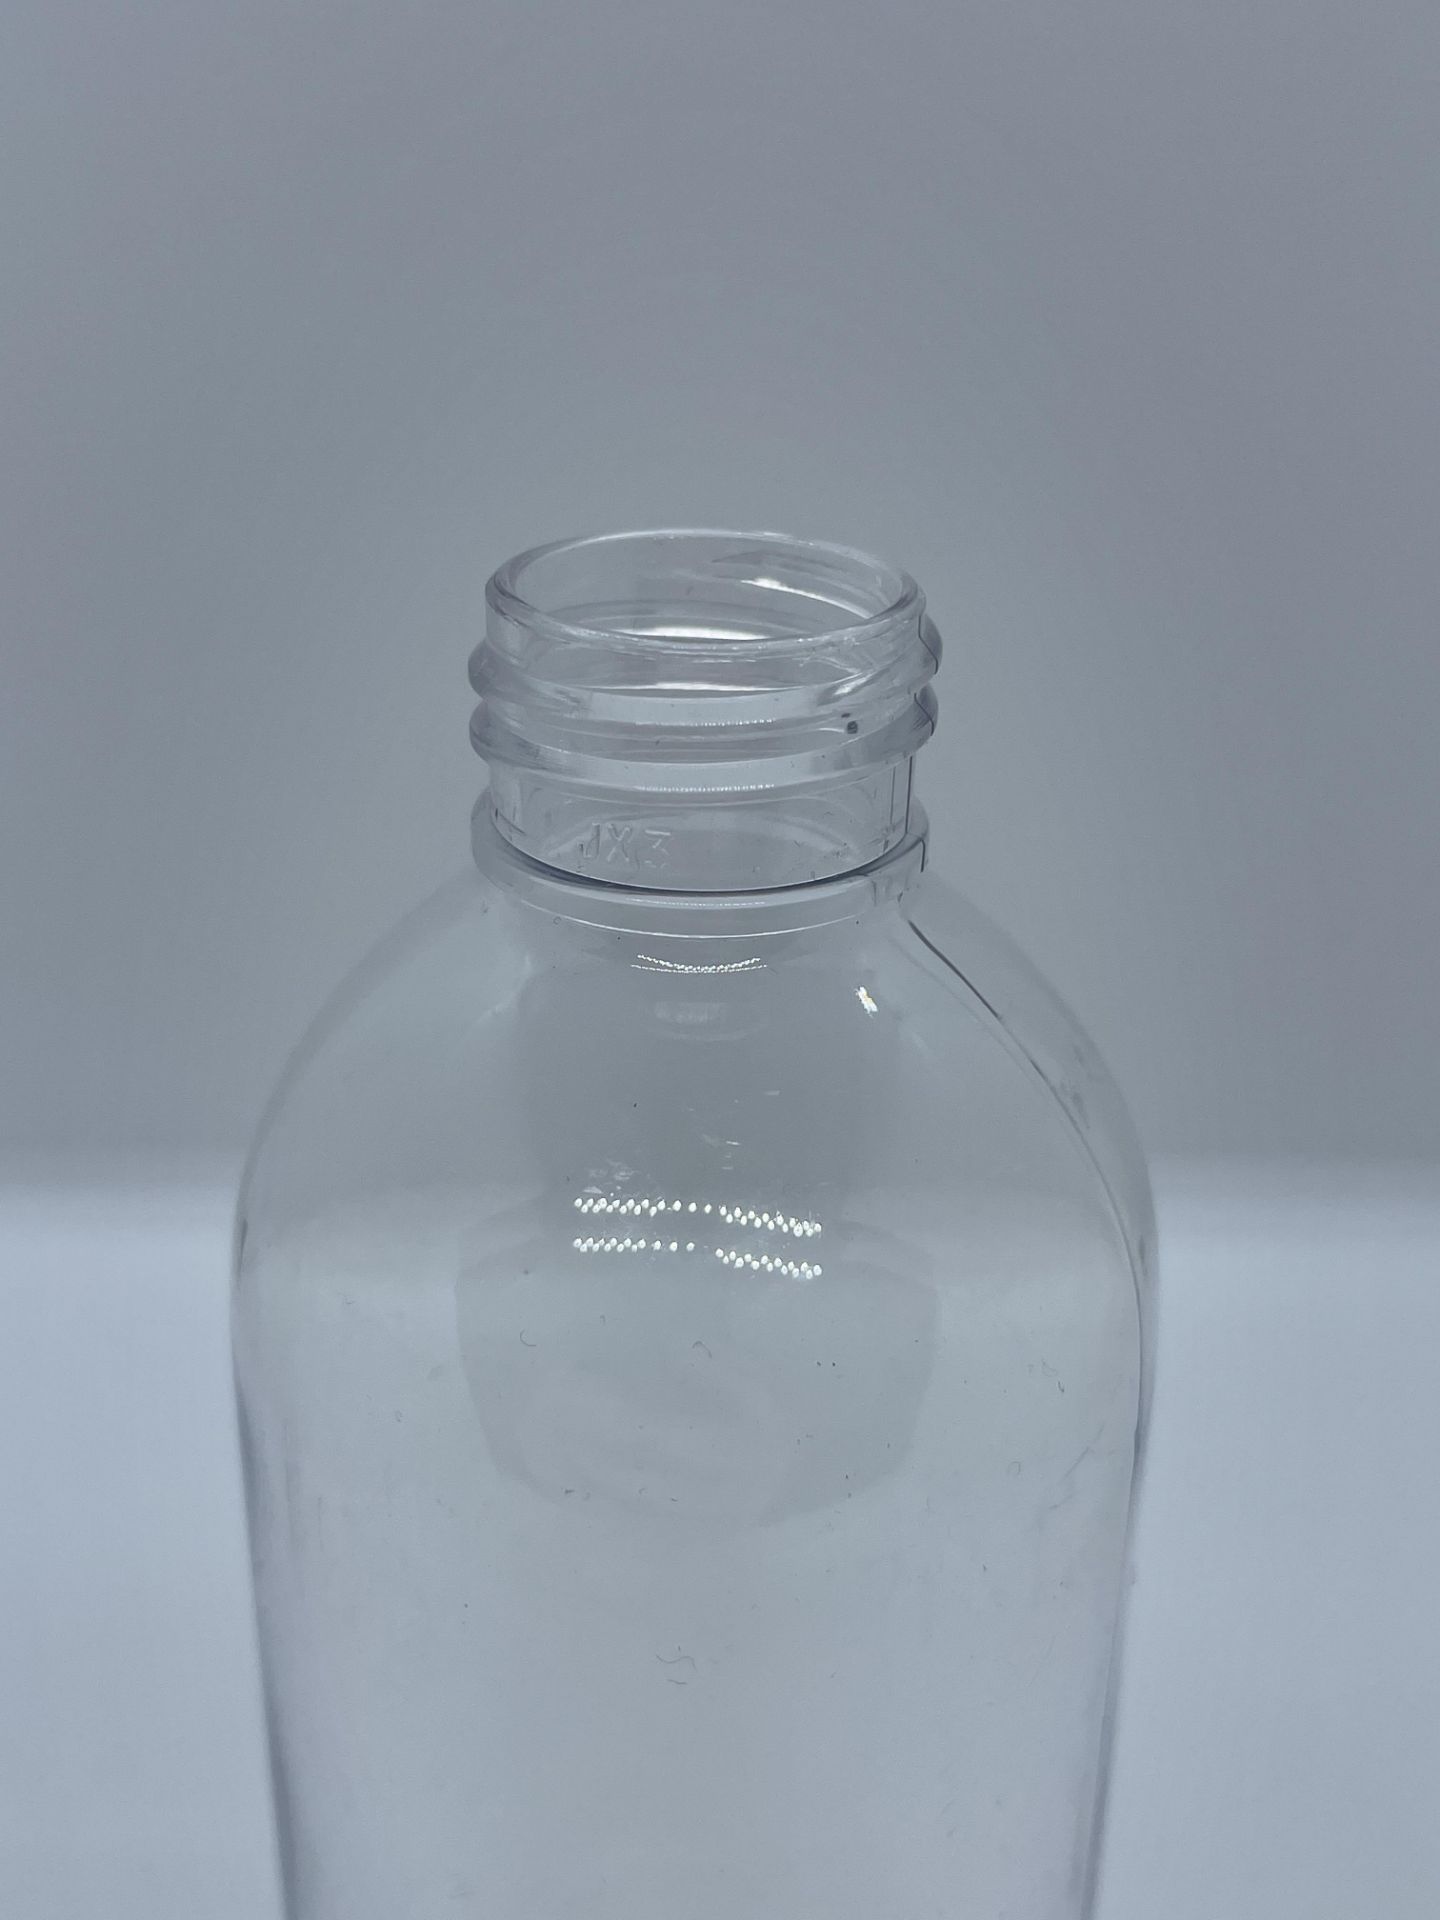 75,000 - Clear Plastic Bullet 8 oz Empty Bottles, 24-410 Threading Neck, 6.25" Tall, 2" Diameter - Image 5 of 10